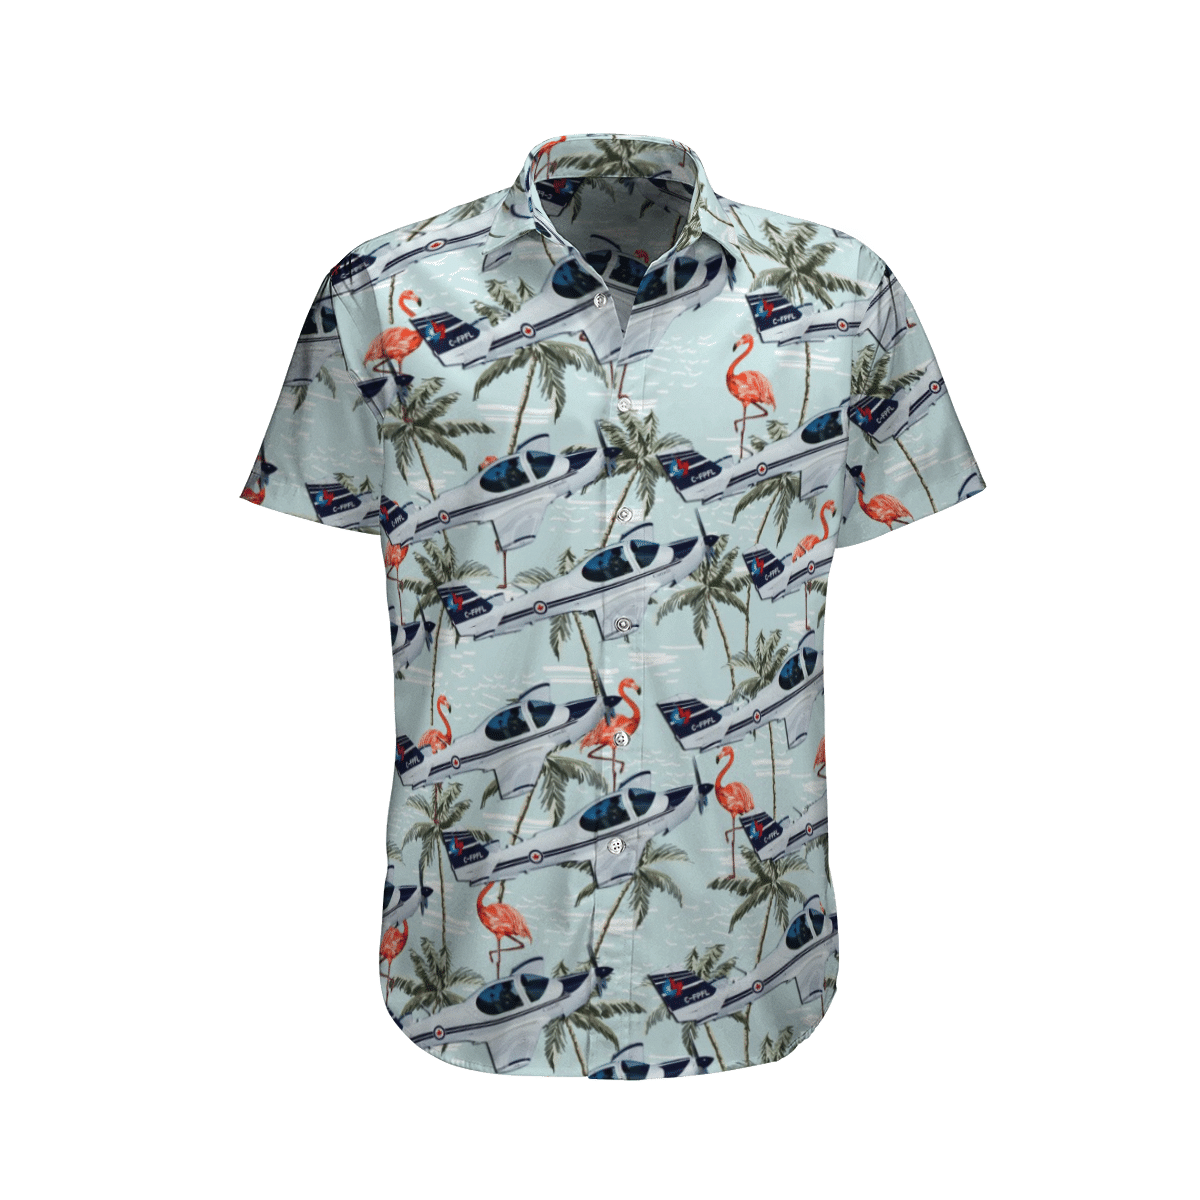 Get a new Hawaiian shirt to enjoy summer vacation 168